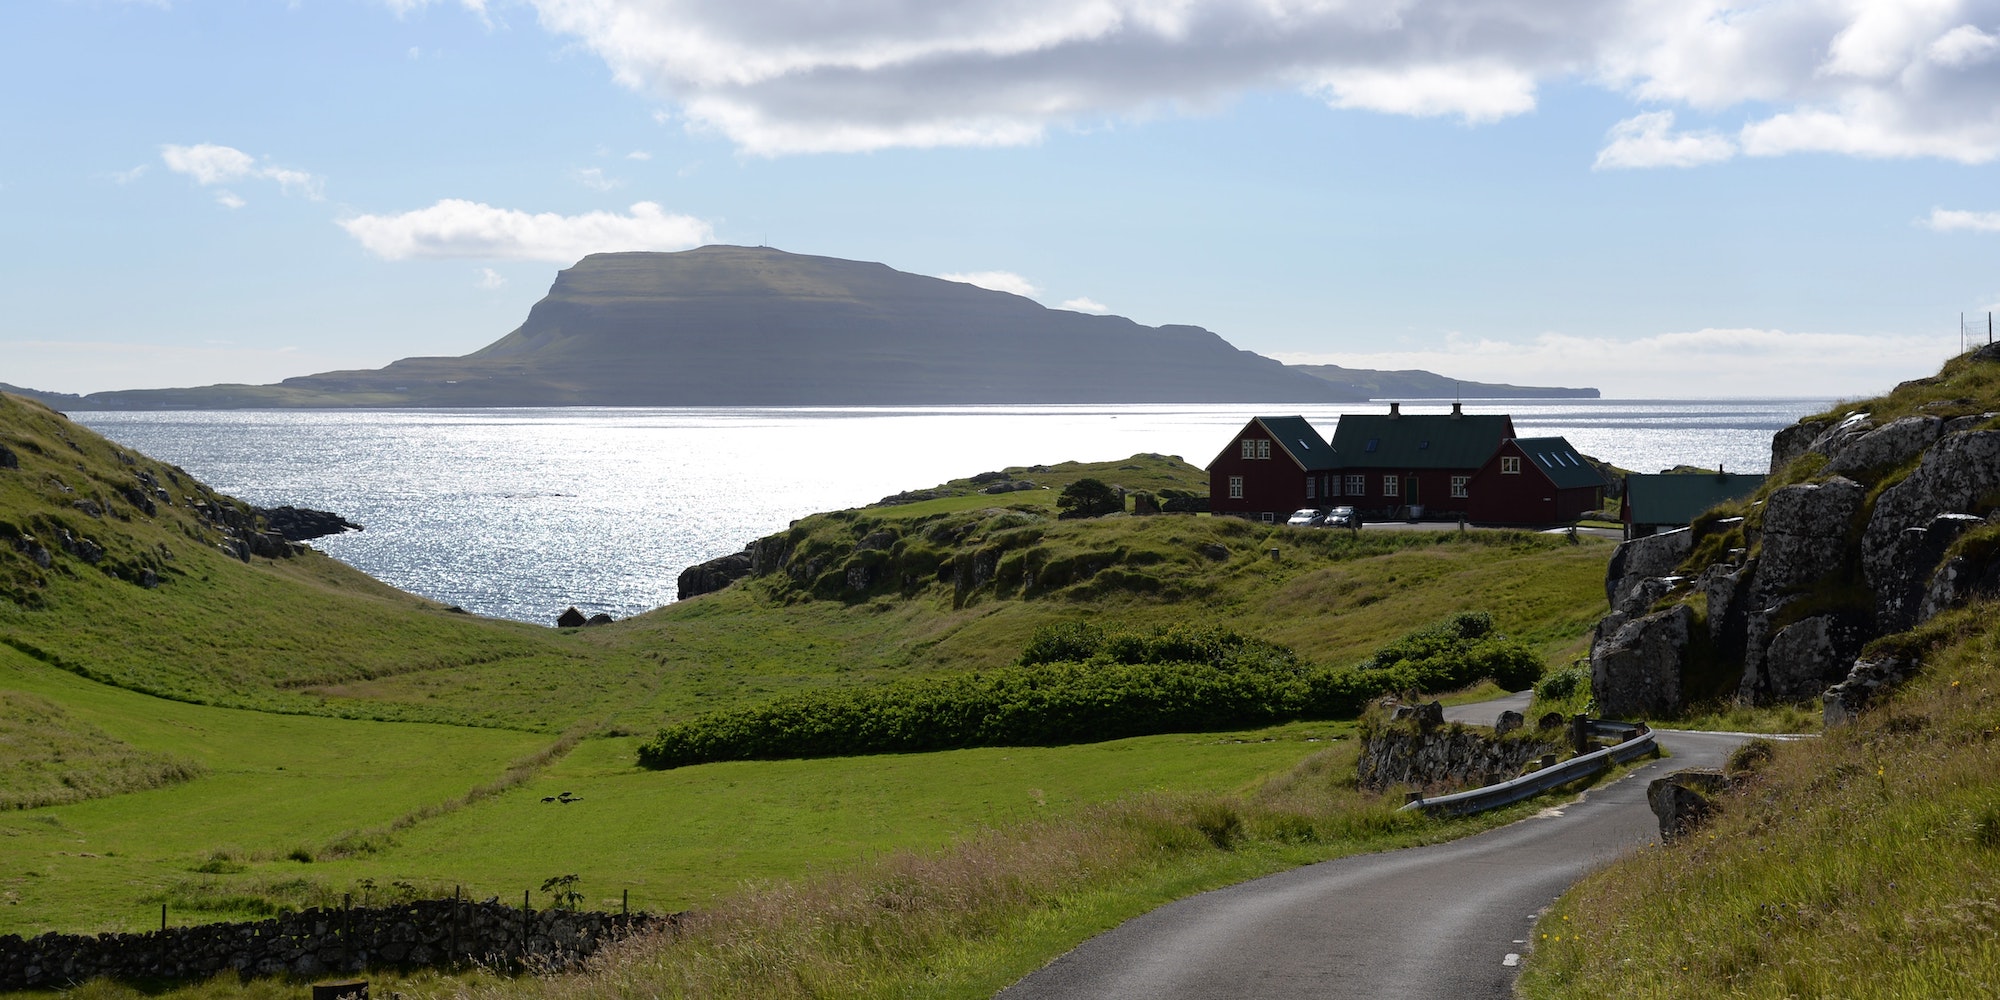 Leynar Faroe Islands: impressive landscape